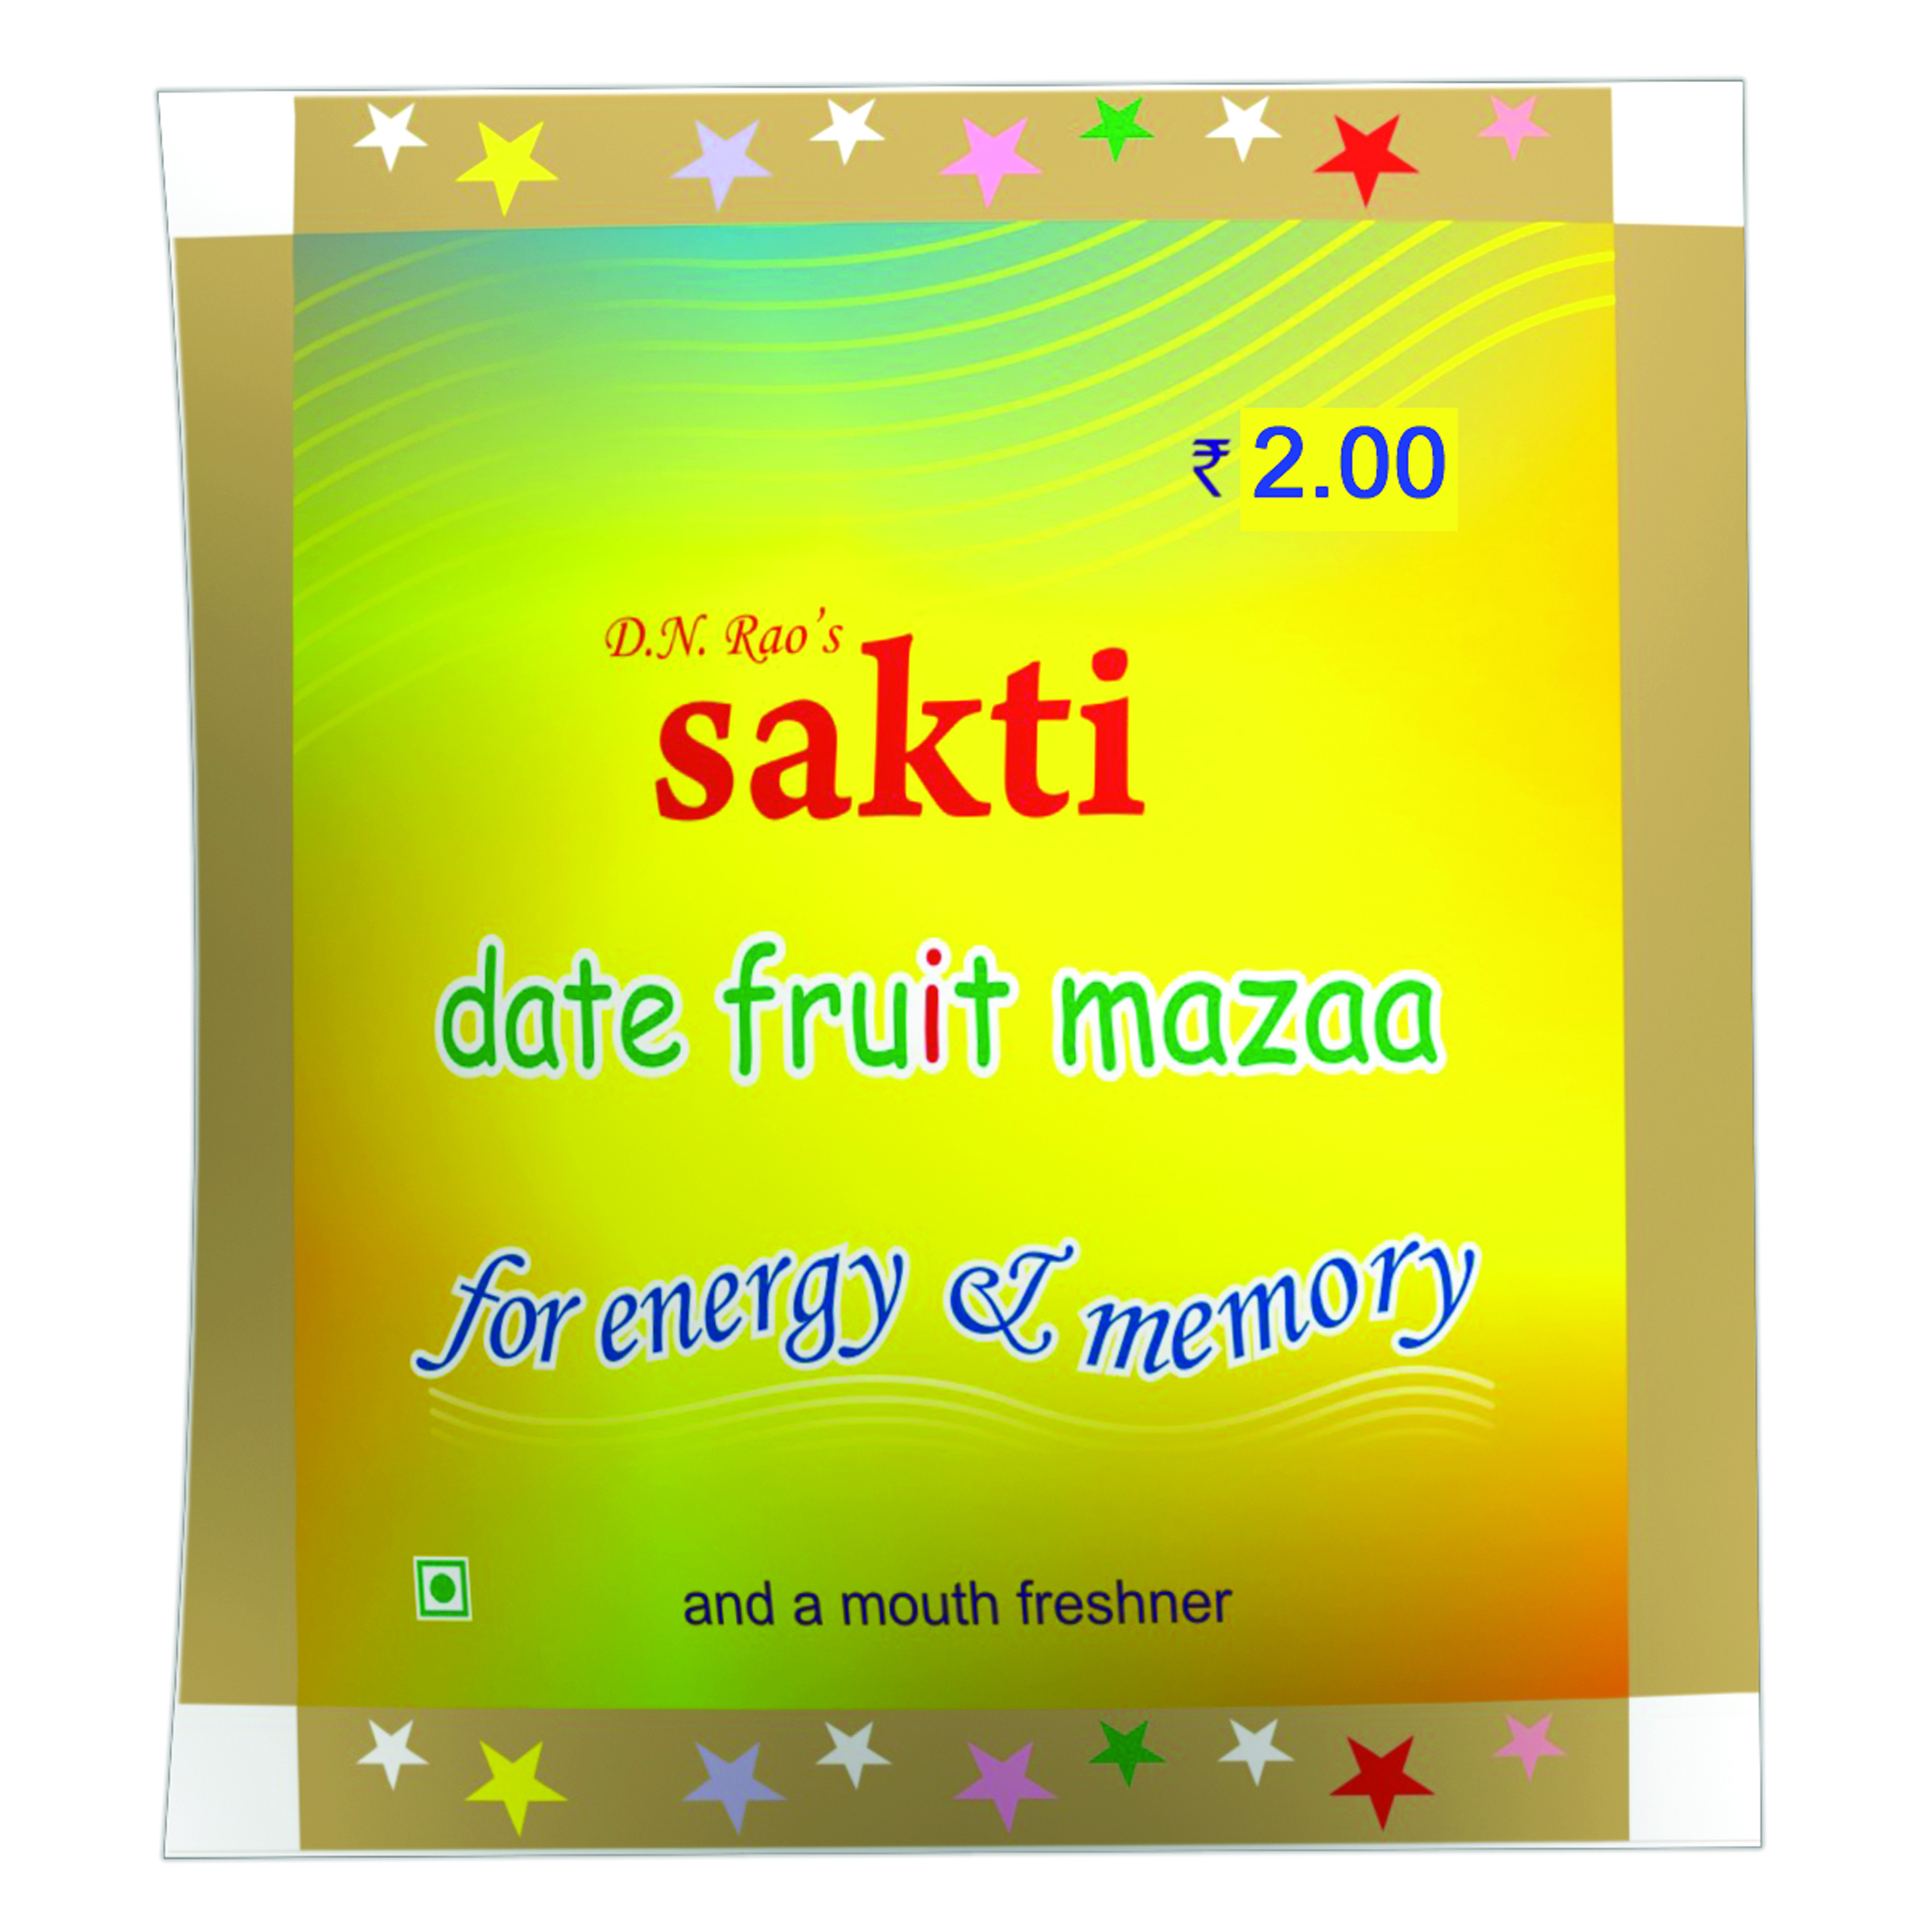 D.N.Rao's sakti date fruit mazaa